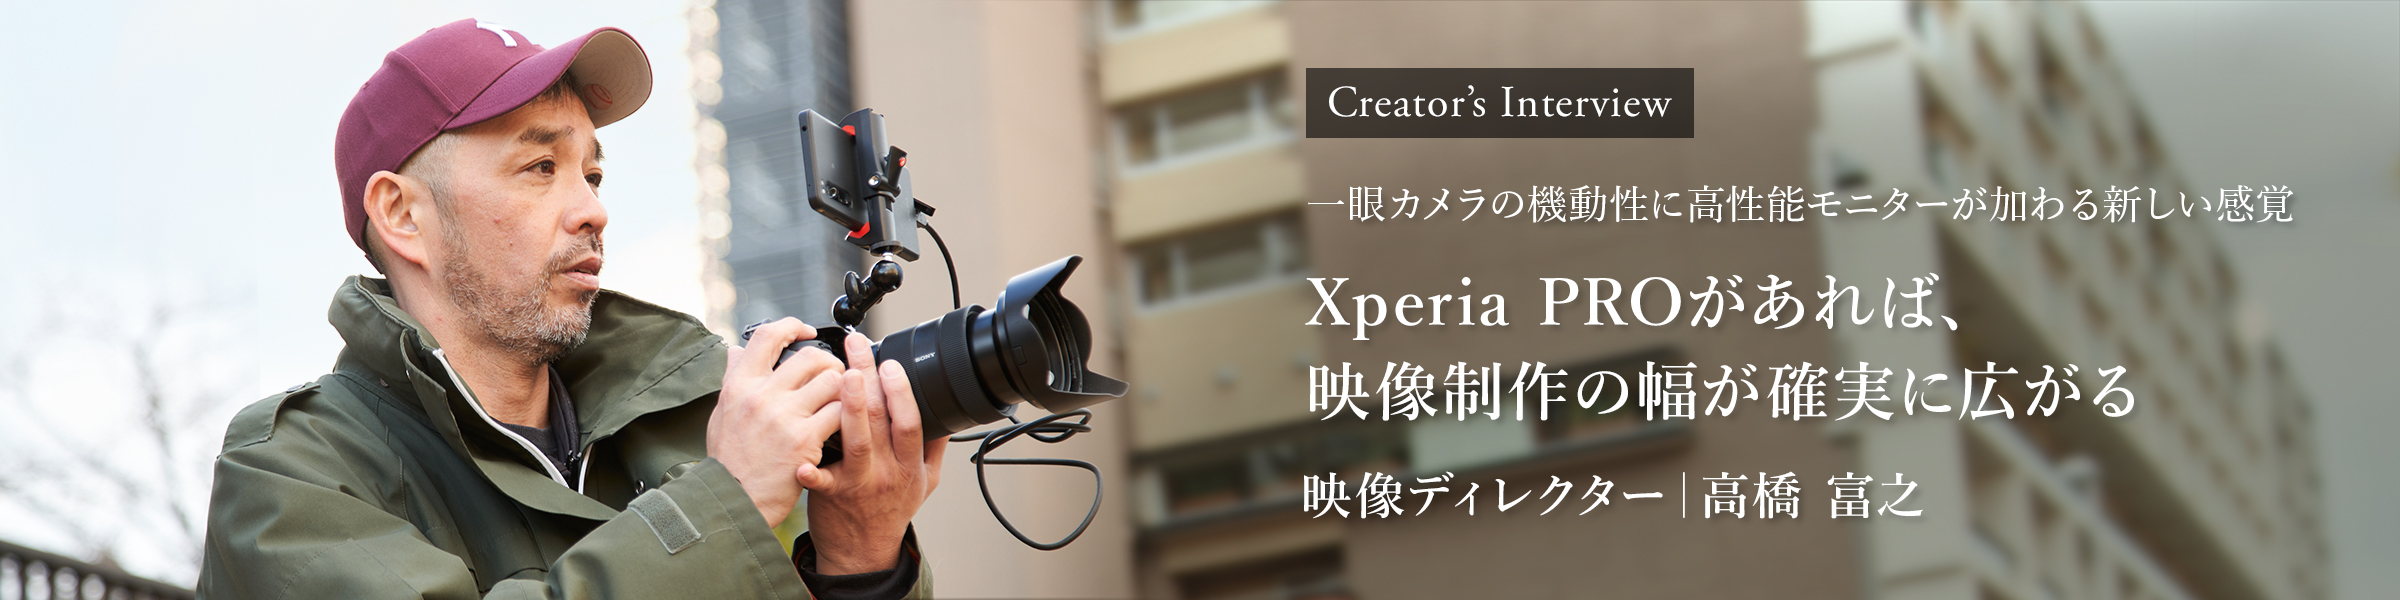 Creator's Interview 一眼カメラの機動性に高性能モニターが加わる新しい感覚 Xperia PROがあれば、映像制作の幅が確実に広がる 映像ディレクター 高橋 富之